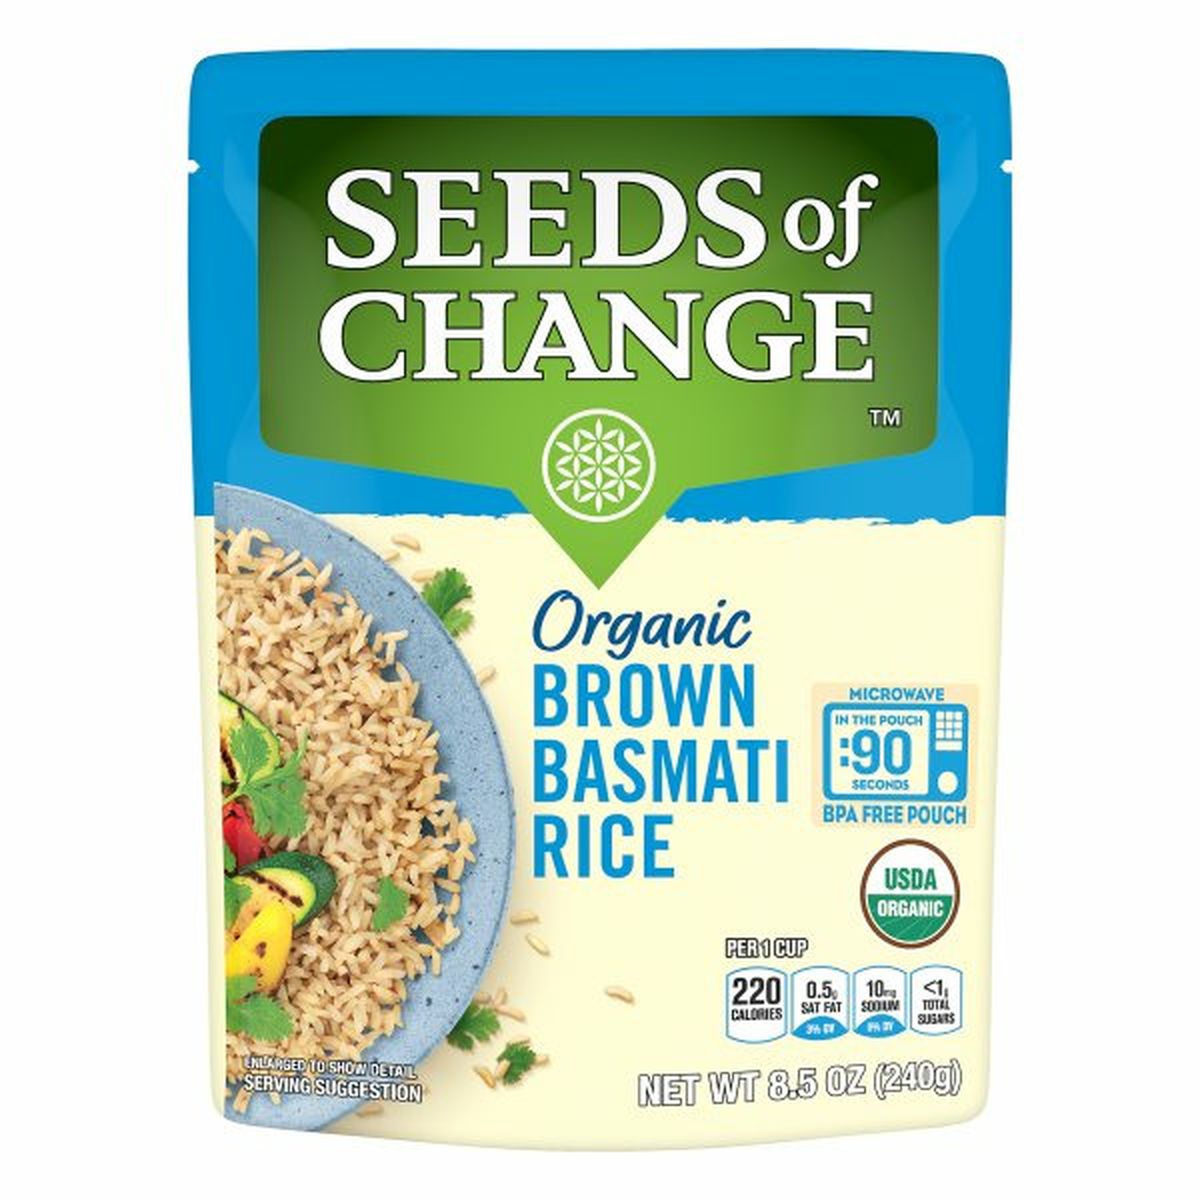 Calories in Seeds of Change Basmati Rice, Brown, Organic